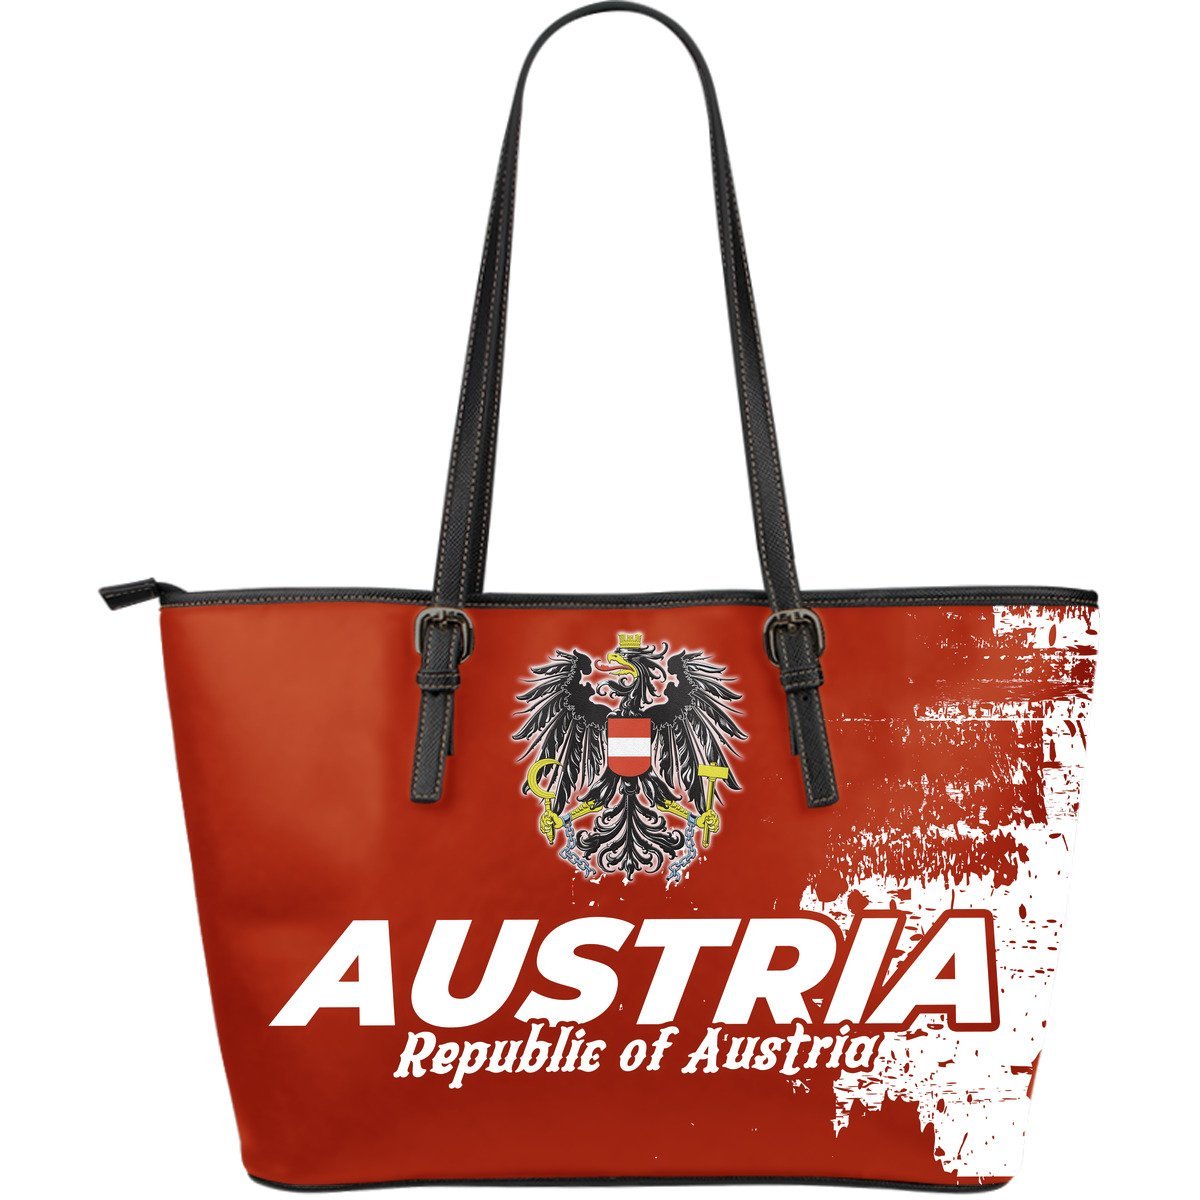 austria-large-leather-tote-bag-republic-austria